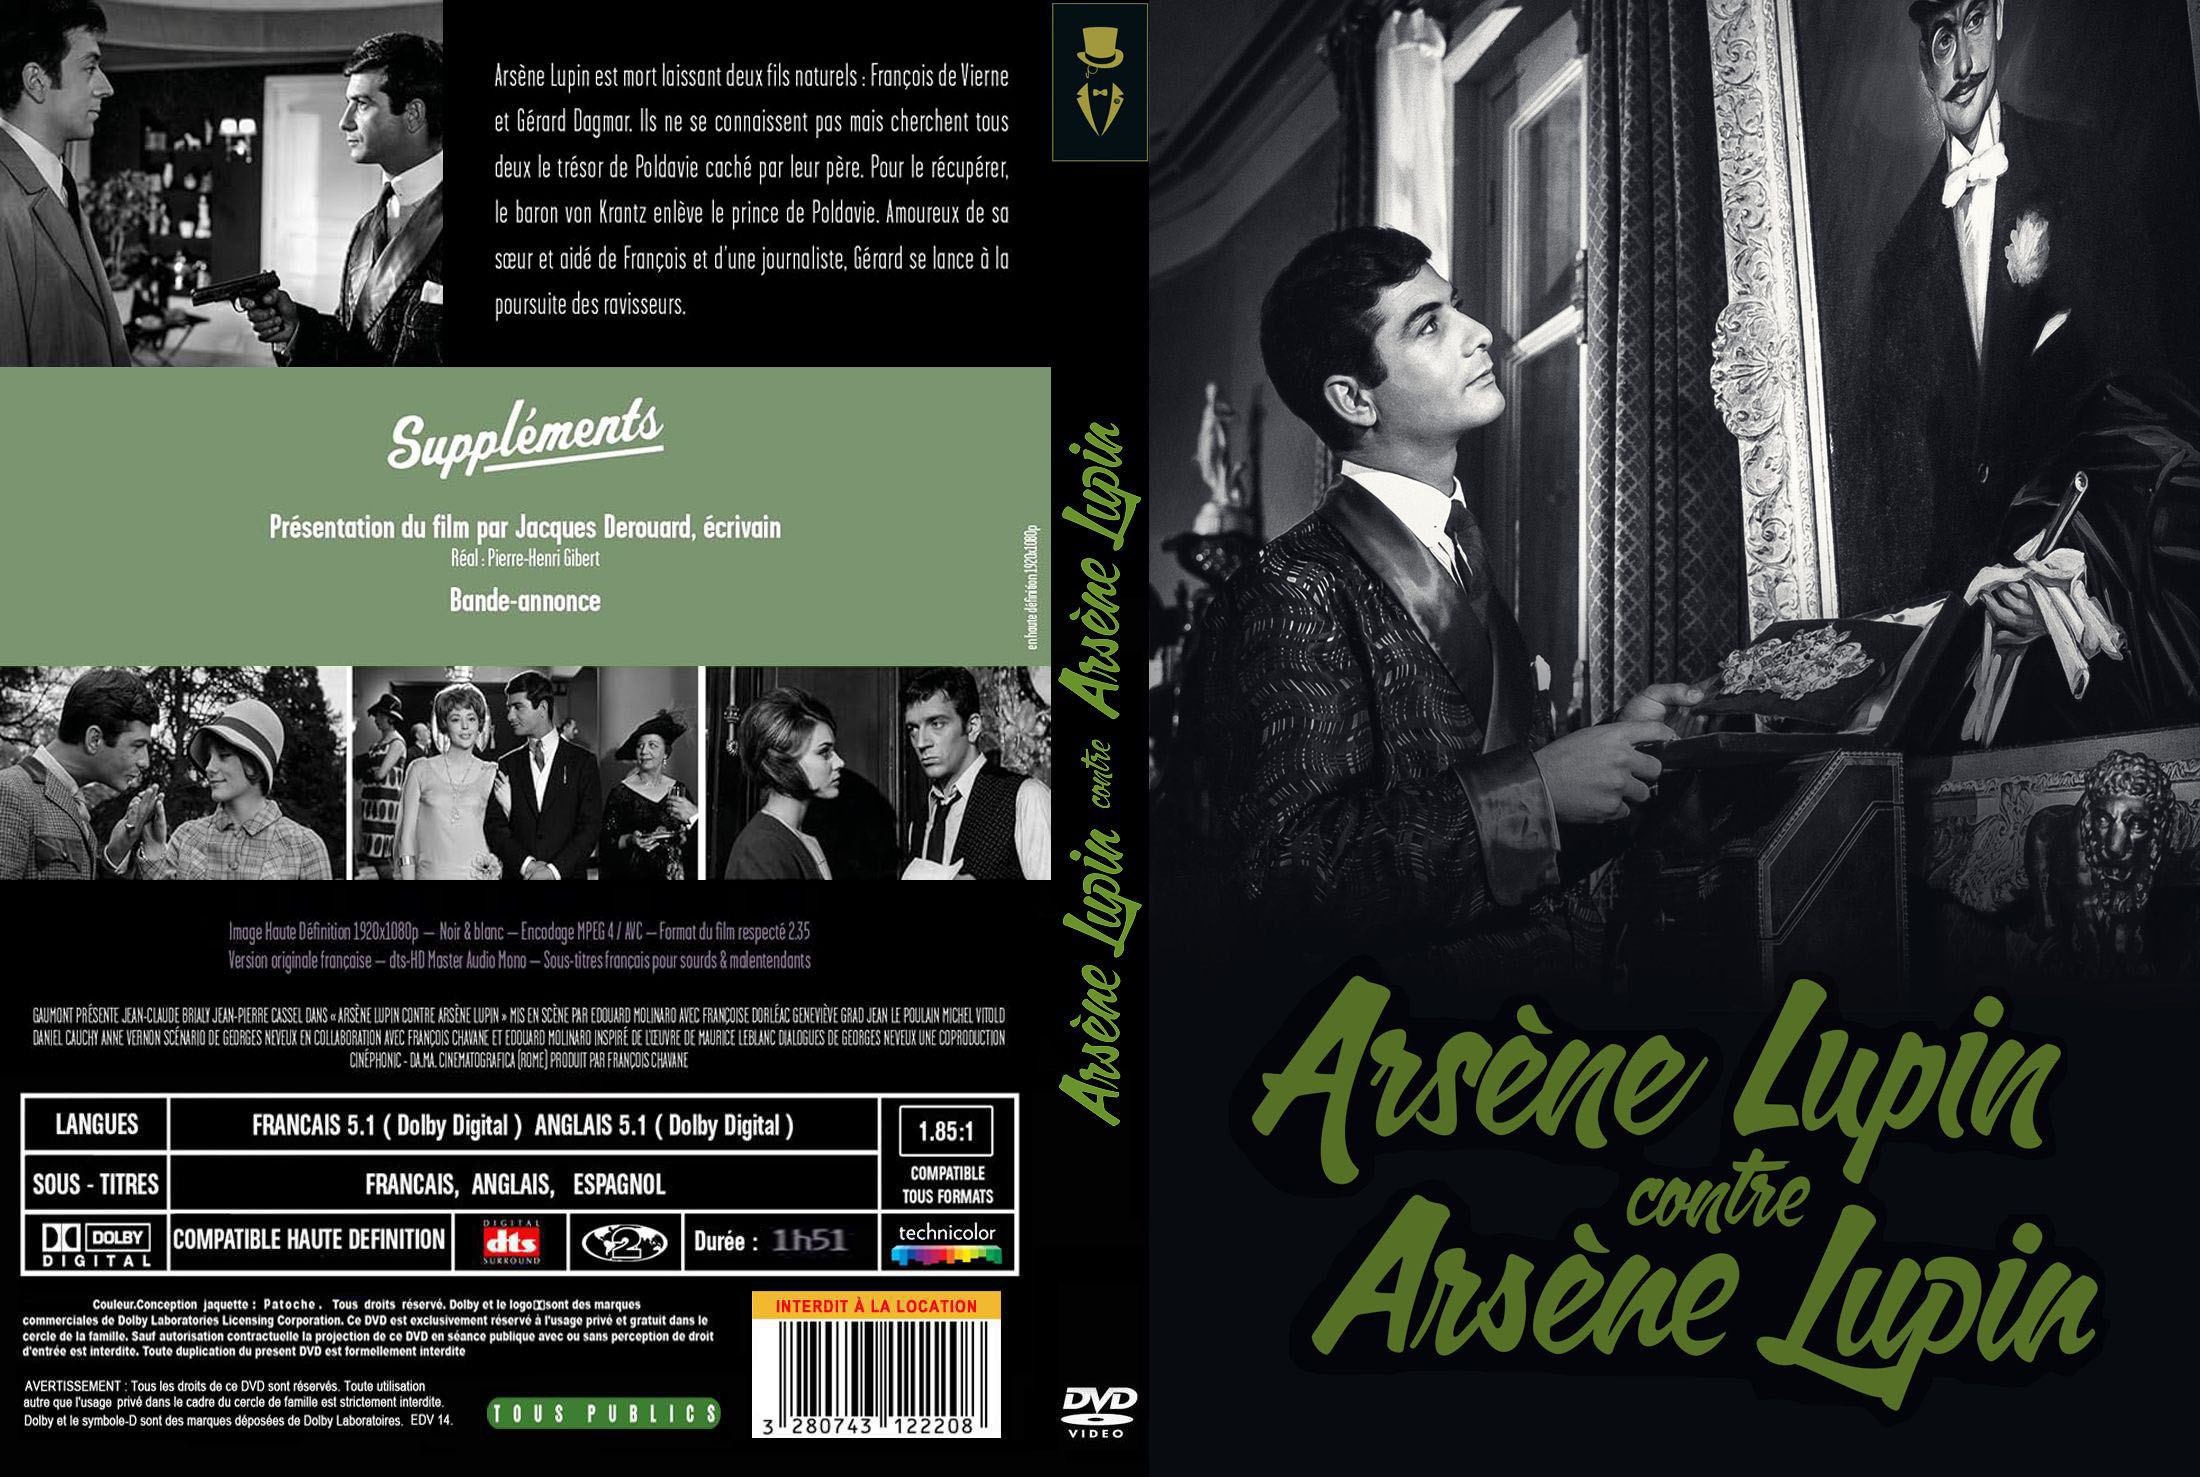 Jaquette DVD Arsene Lupin contre Arsene Lupin custom